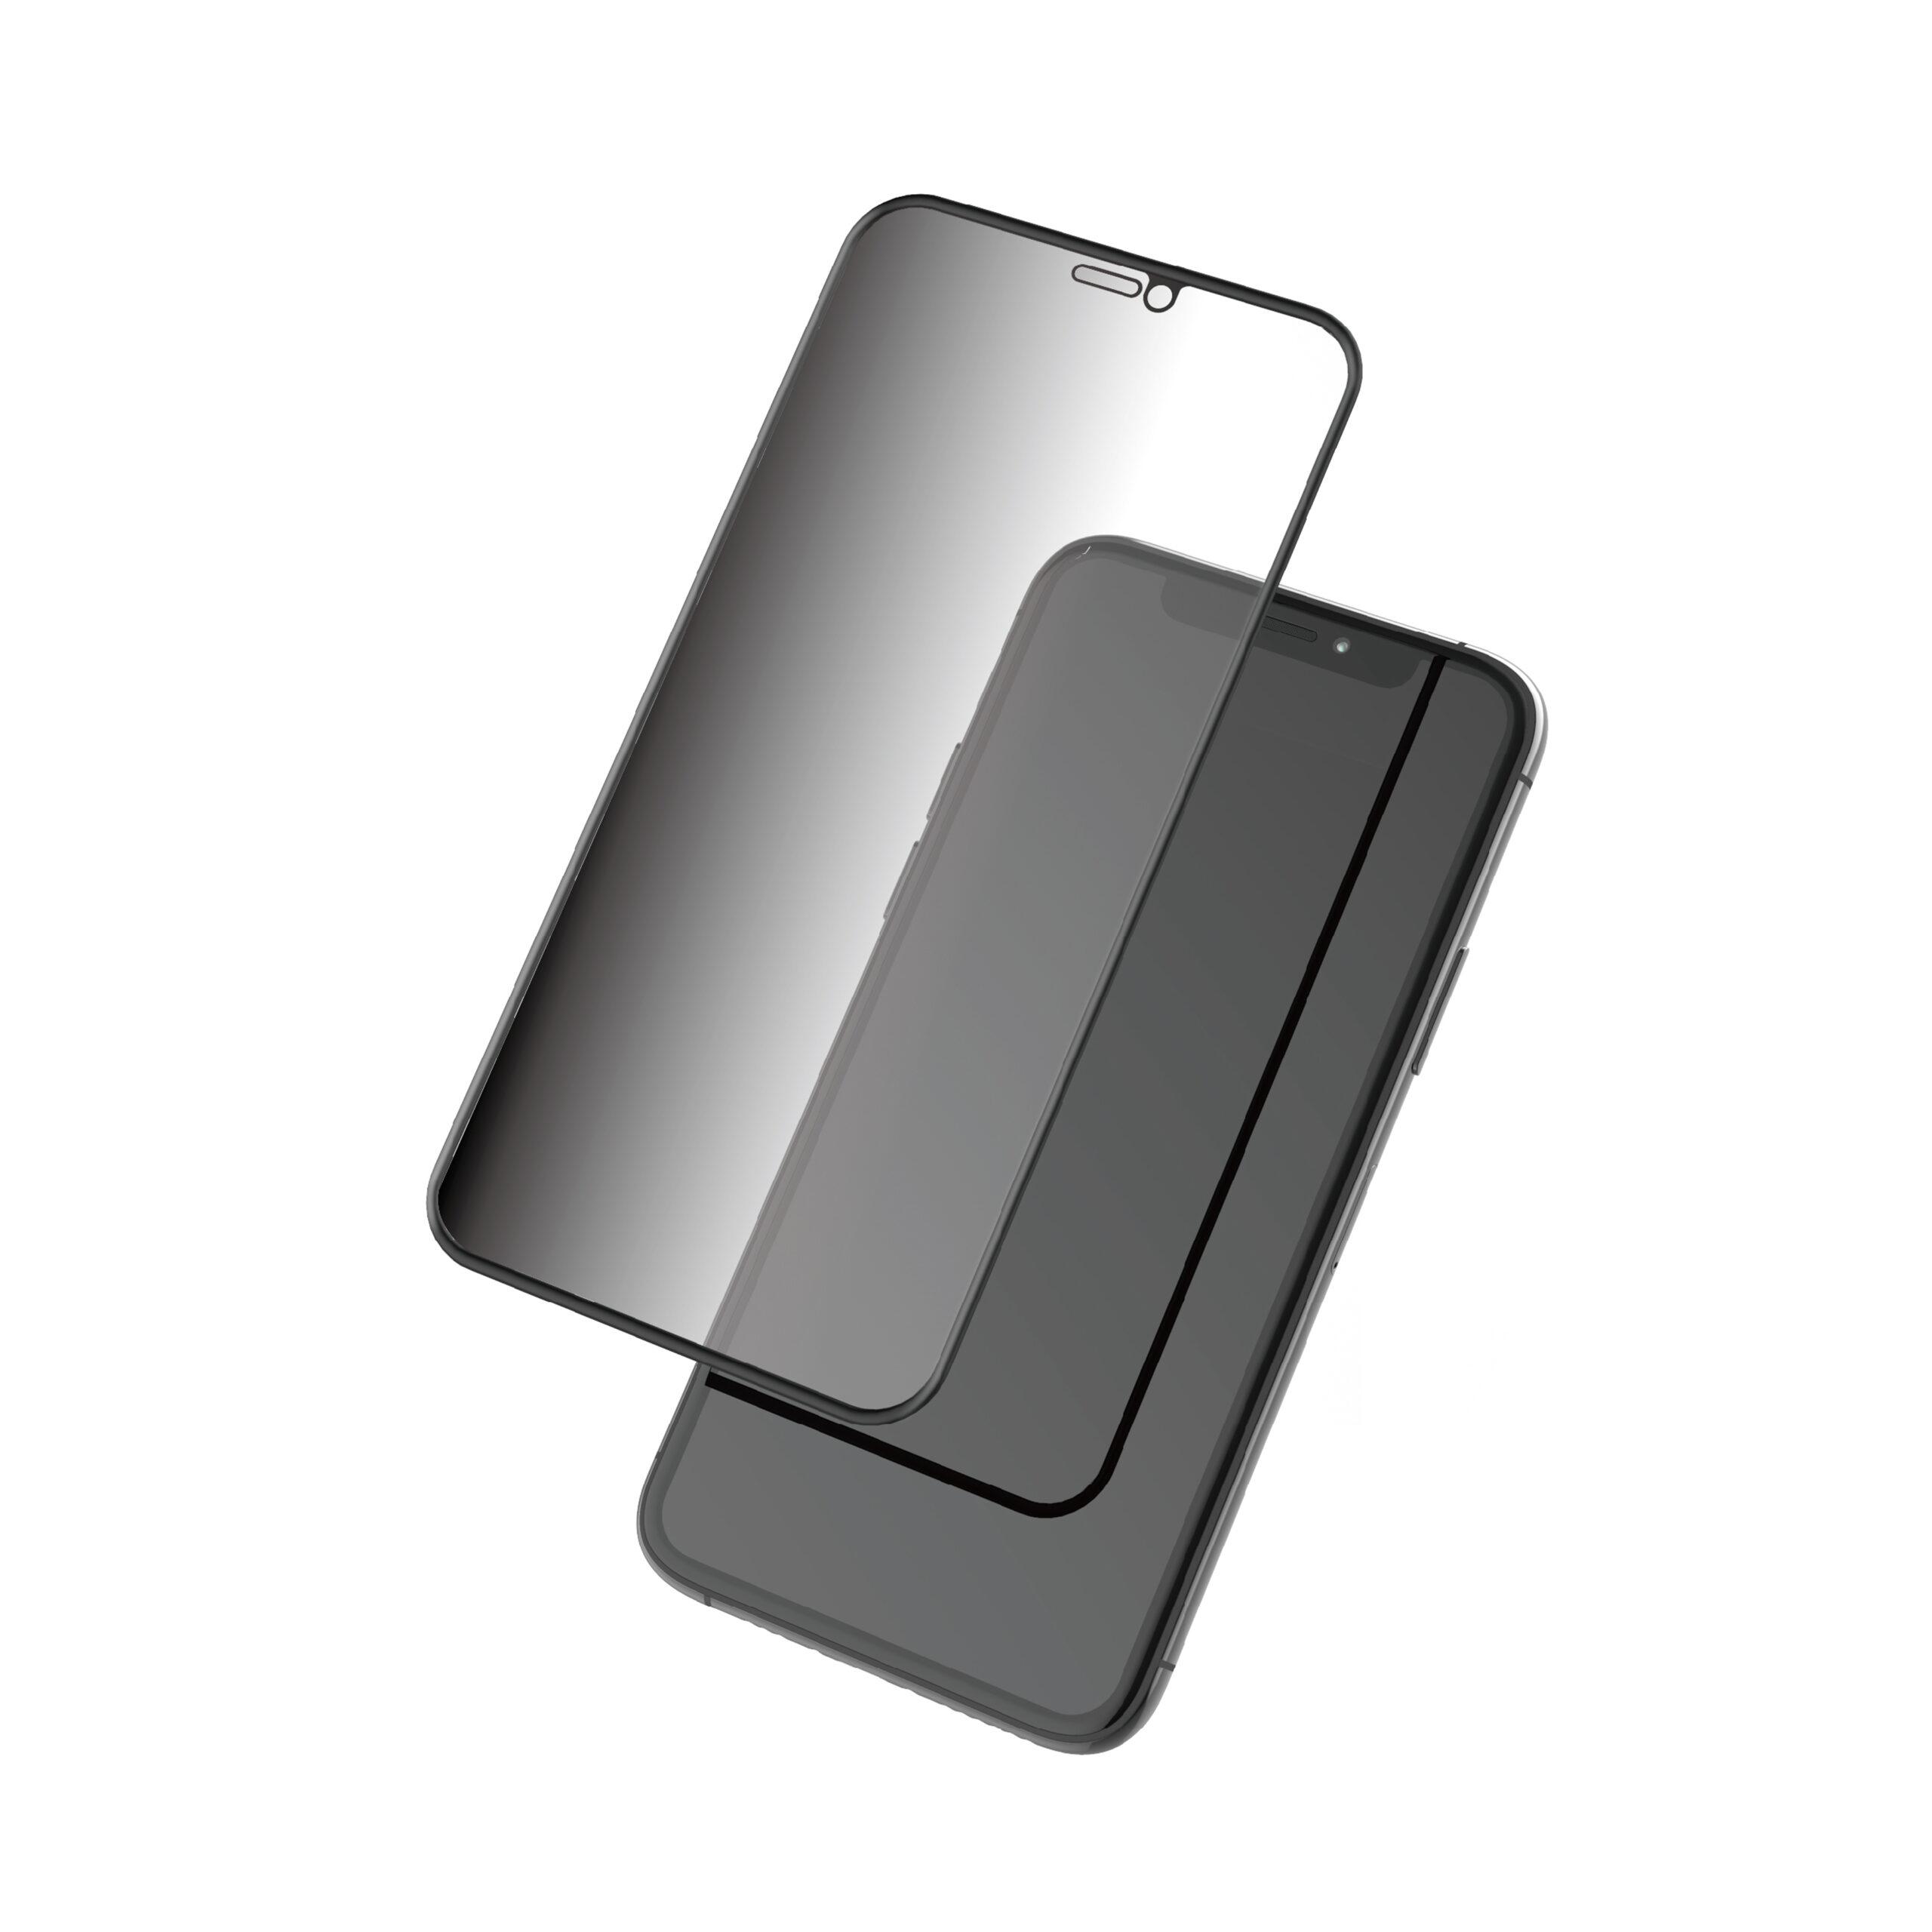 شاشة حماية للخصوصية اسود 3D Silicone Privacy Glass Screen Protector for iPhone 12 Pro Max من Green